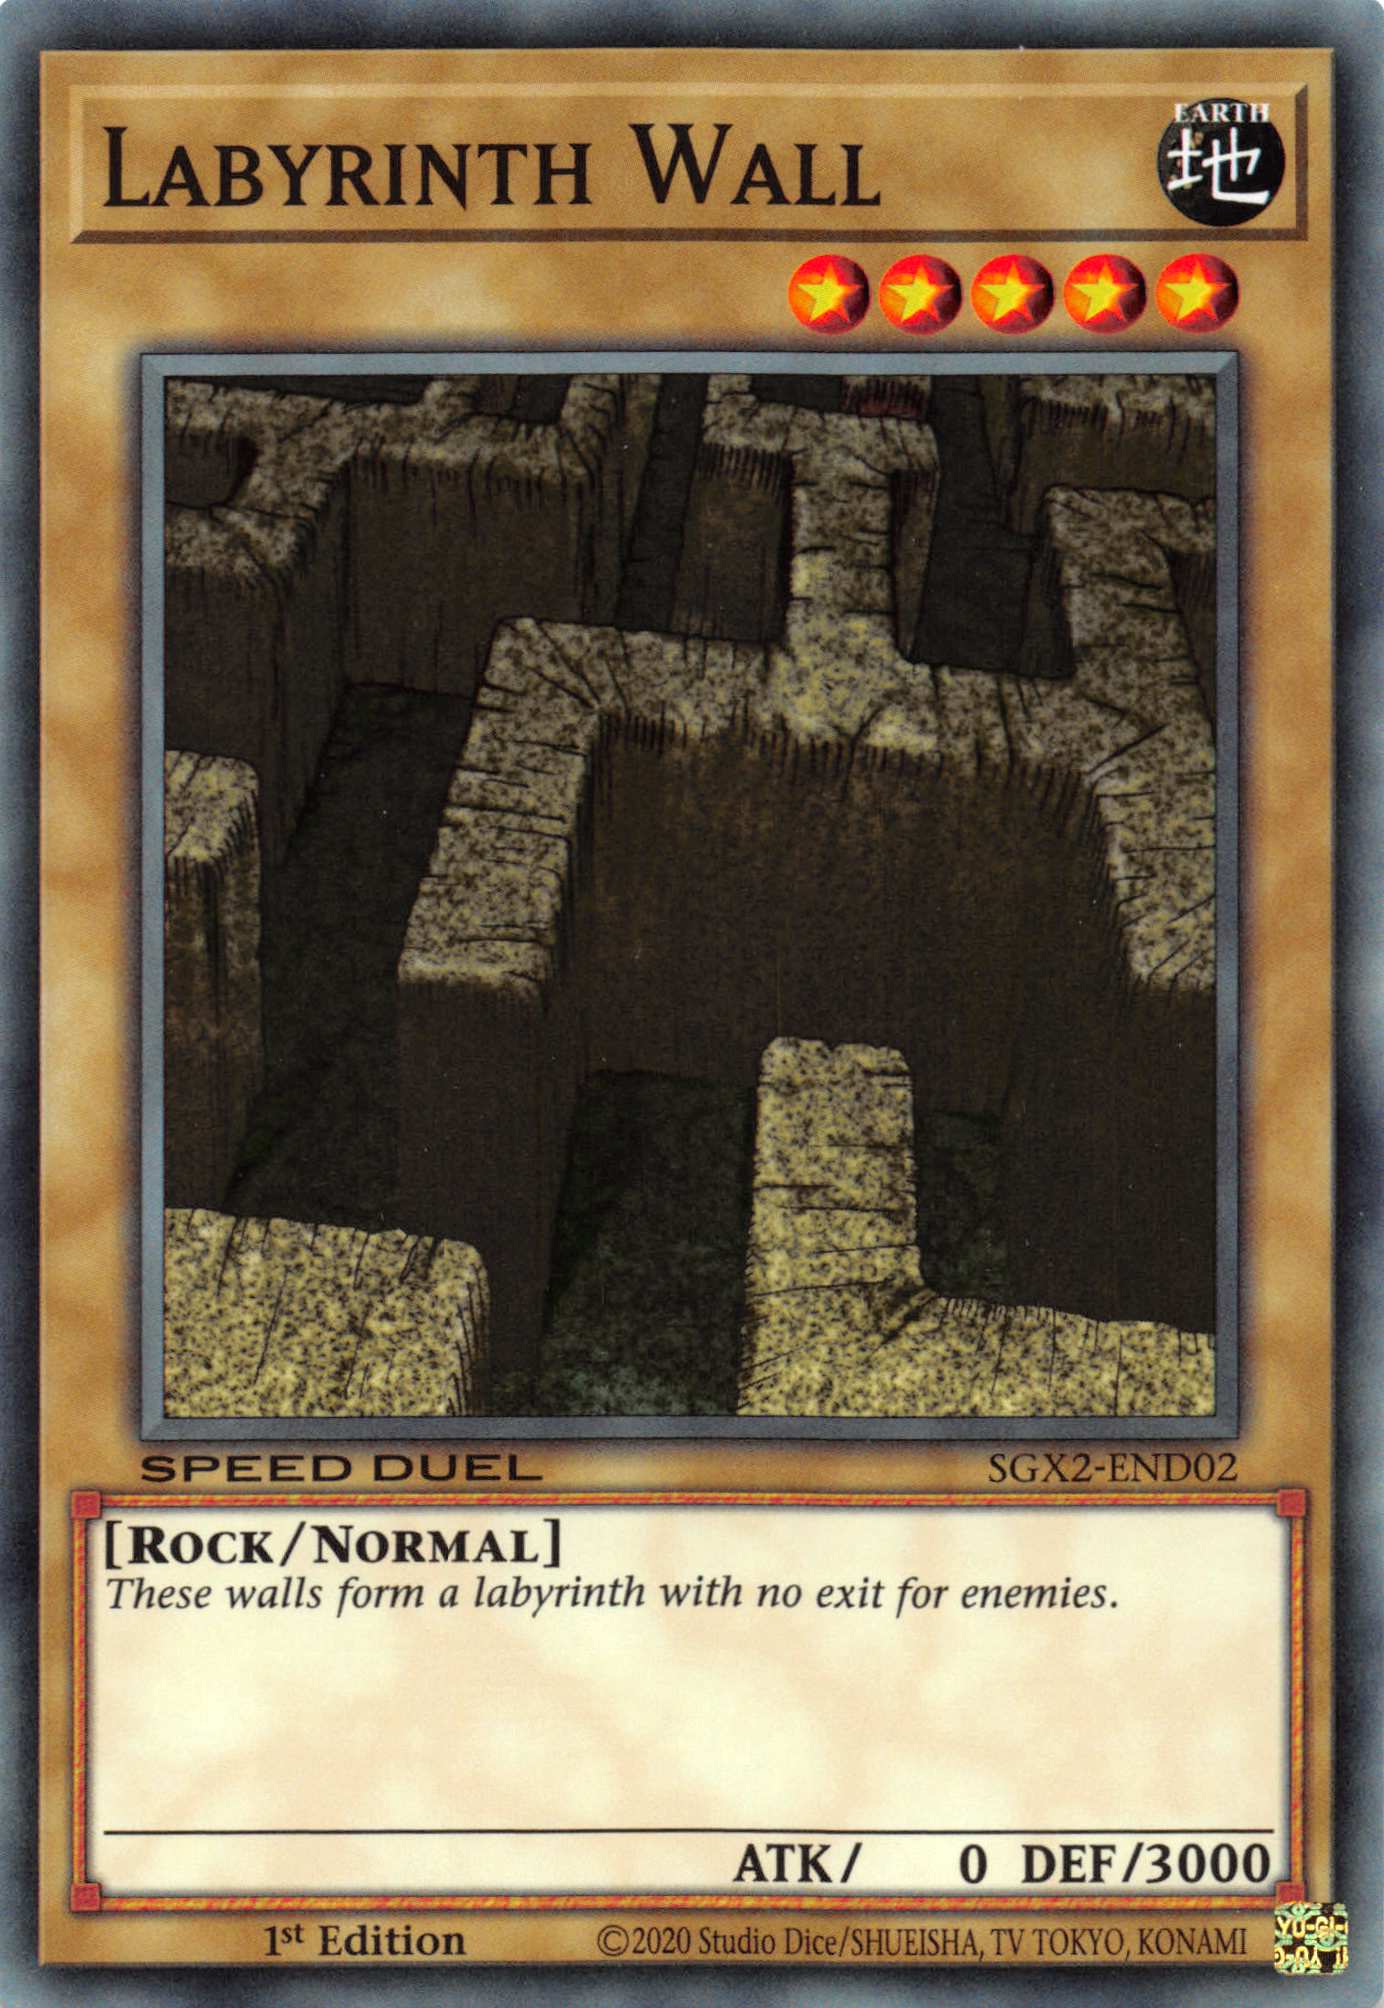 Labyrinth Wall [SGX2-END02] Common